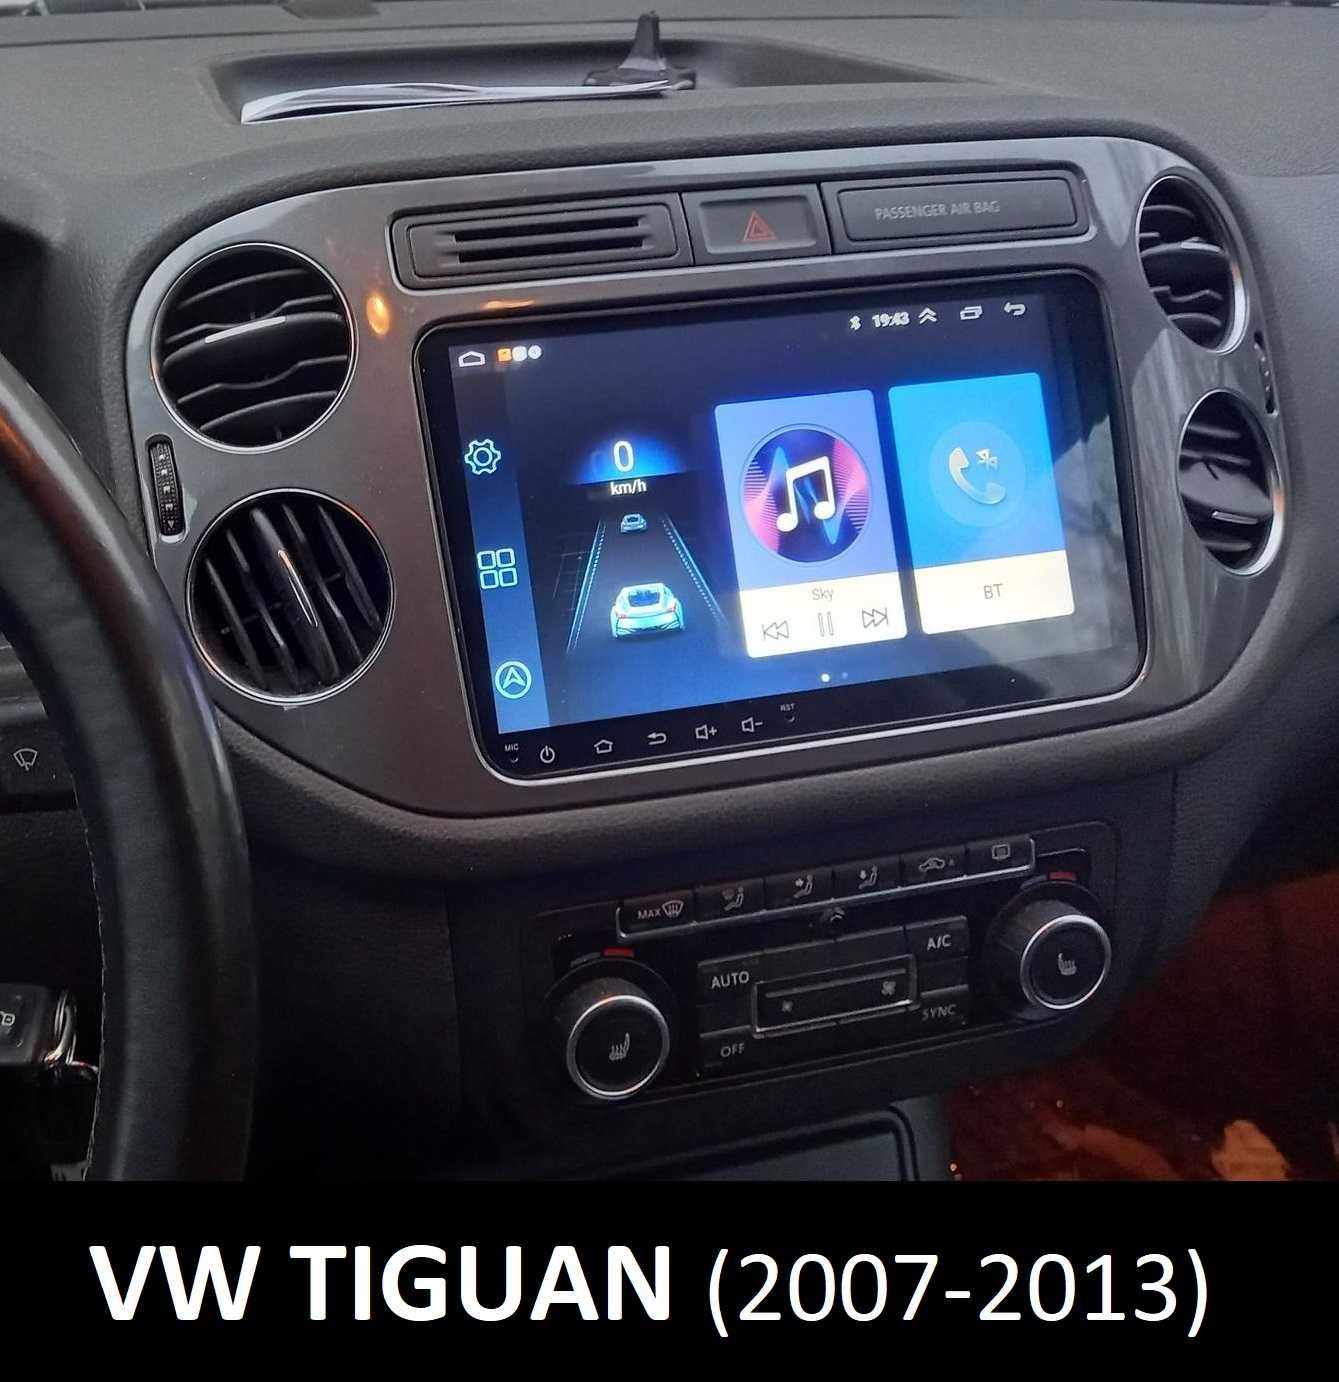 (NOVO) Rádio • 2DIN 9" • VW SEAT SKODA • Android • [4+32GB] • Wifi GPS